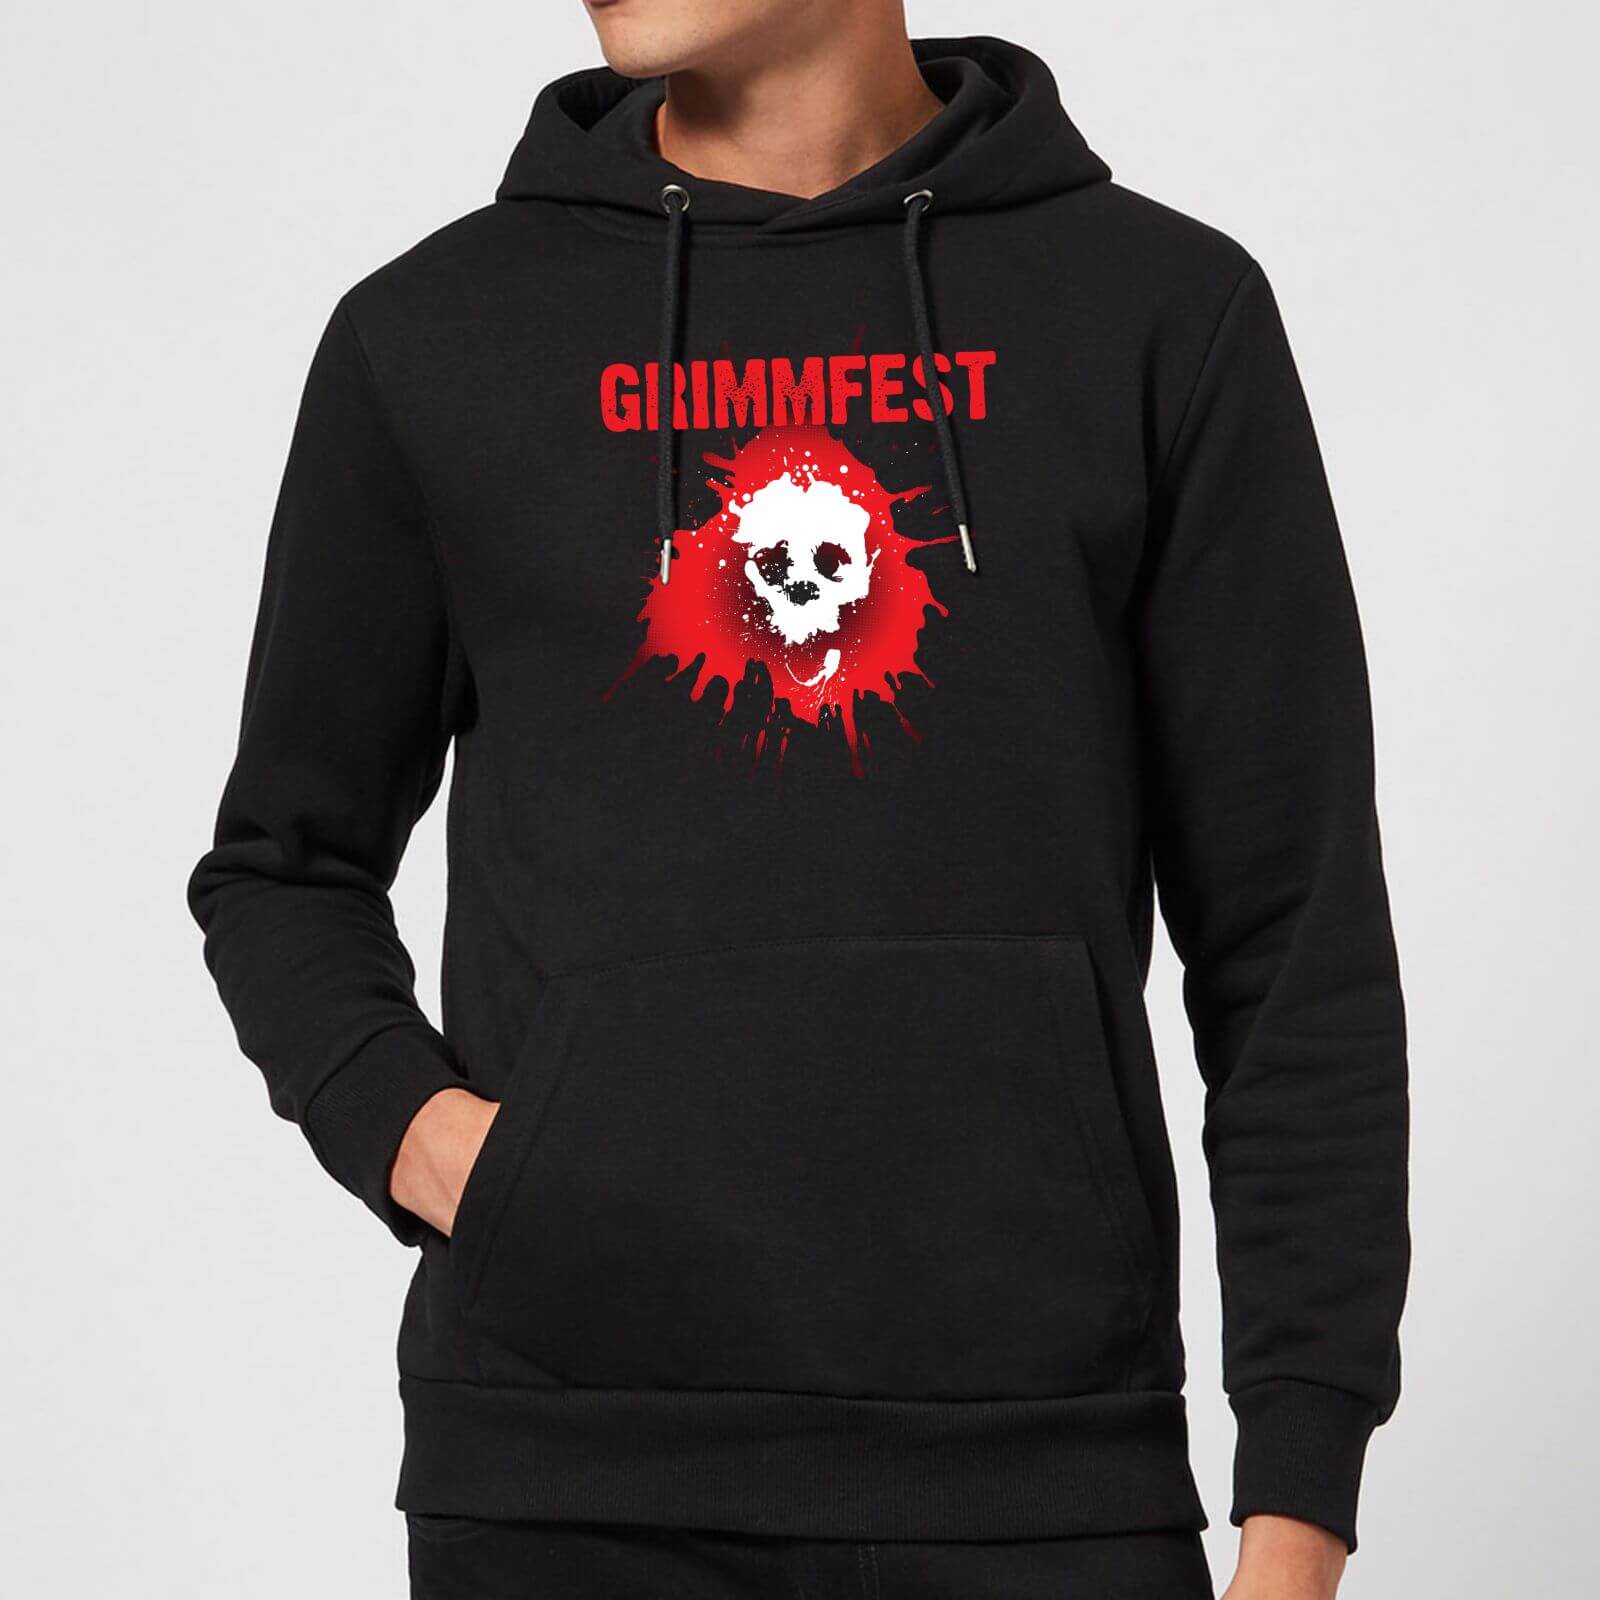 Grimmfest Logo Hoodie - Black - XL - Black